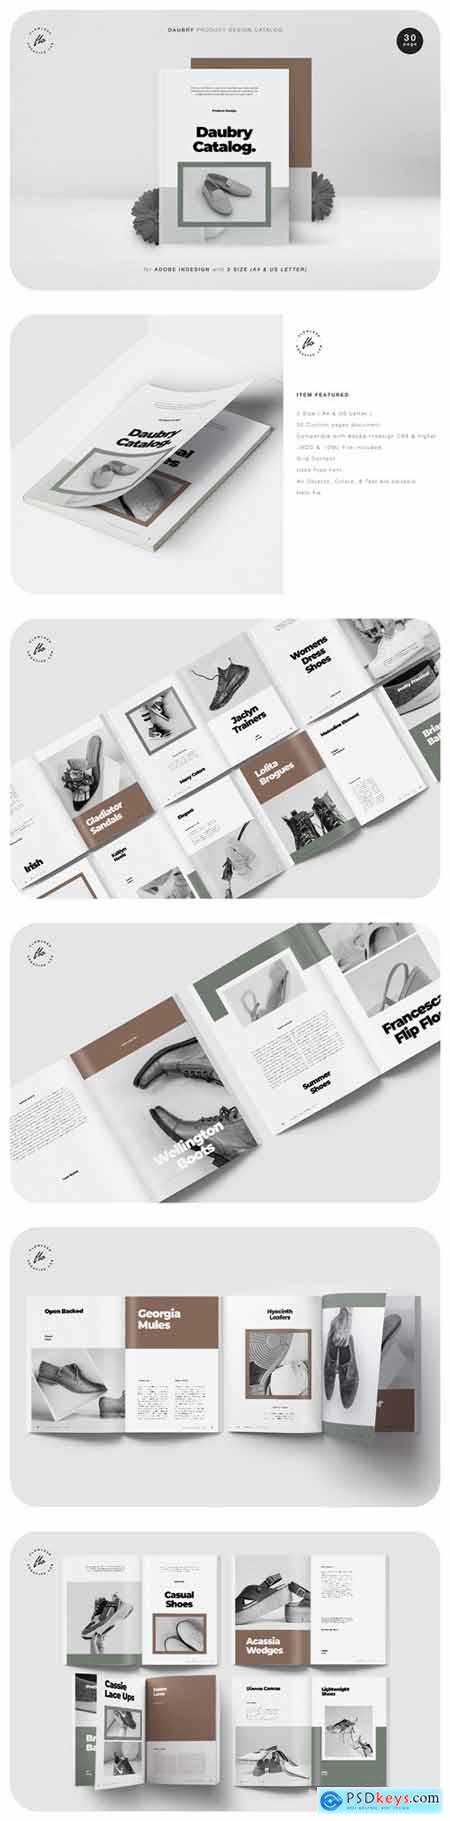 Daubry Product Design Catalog